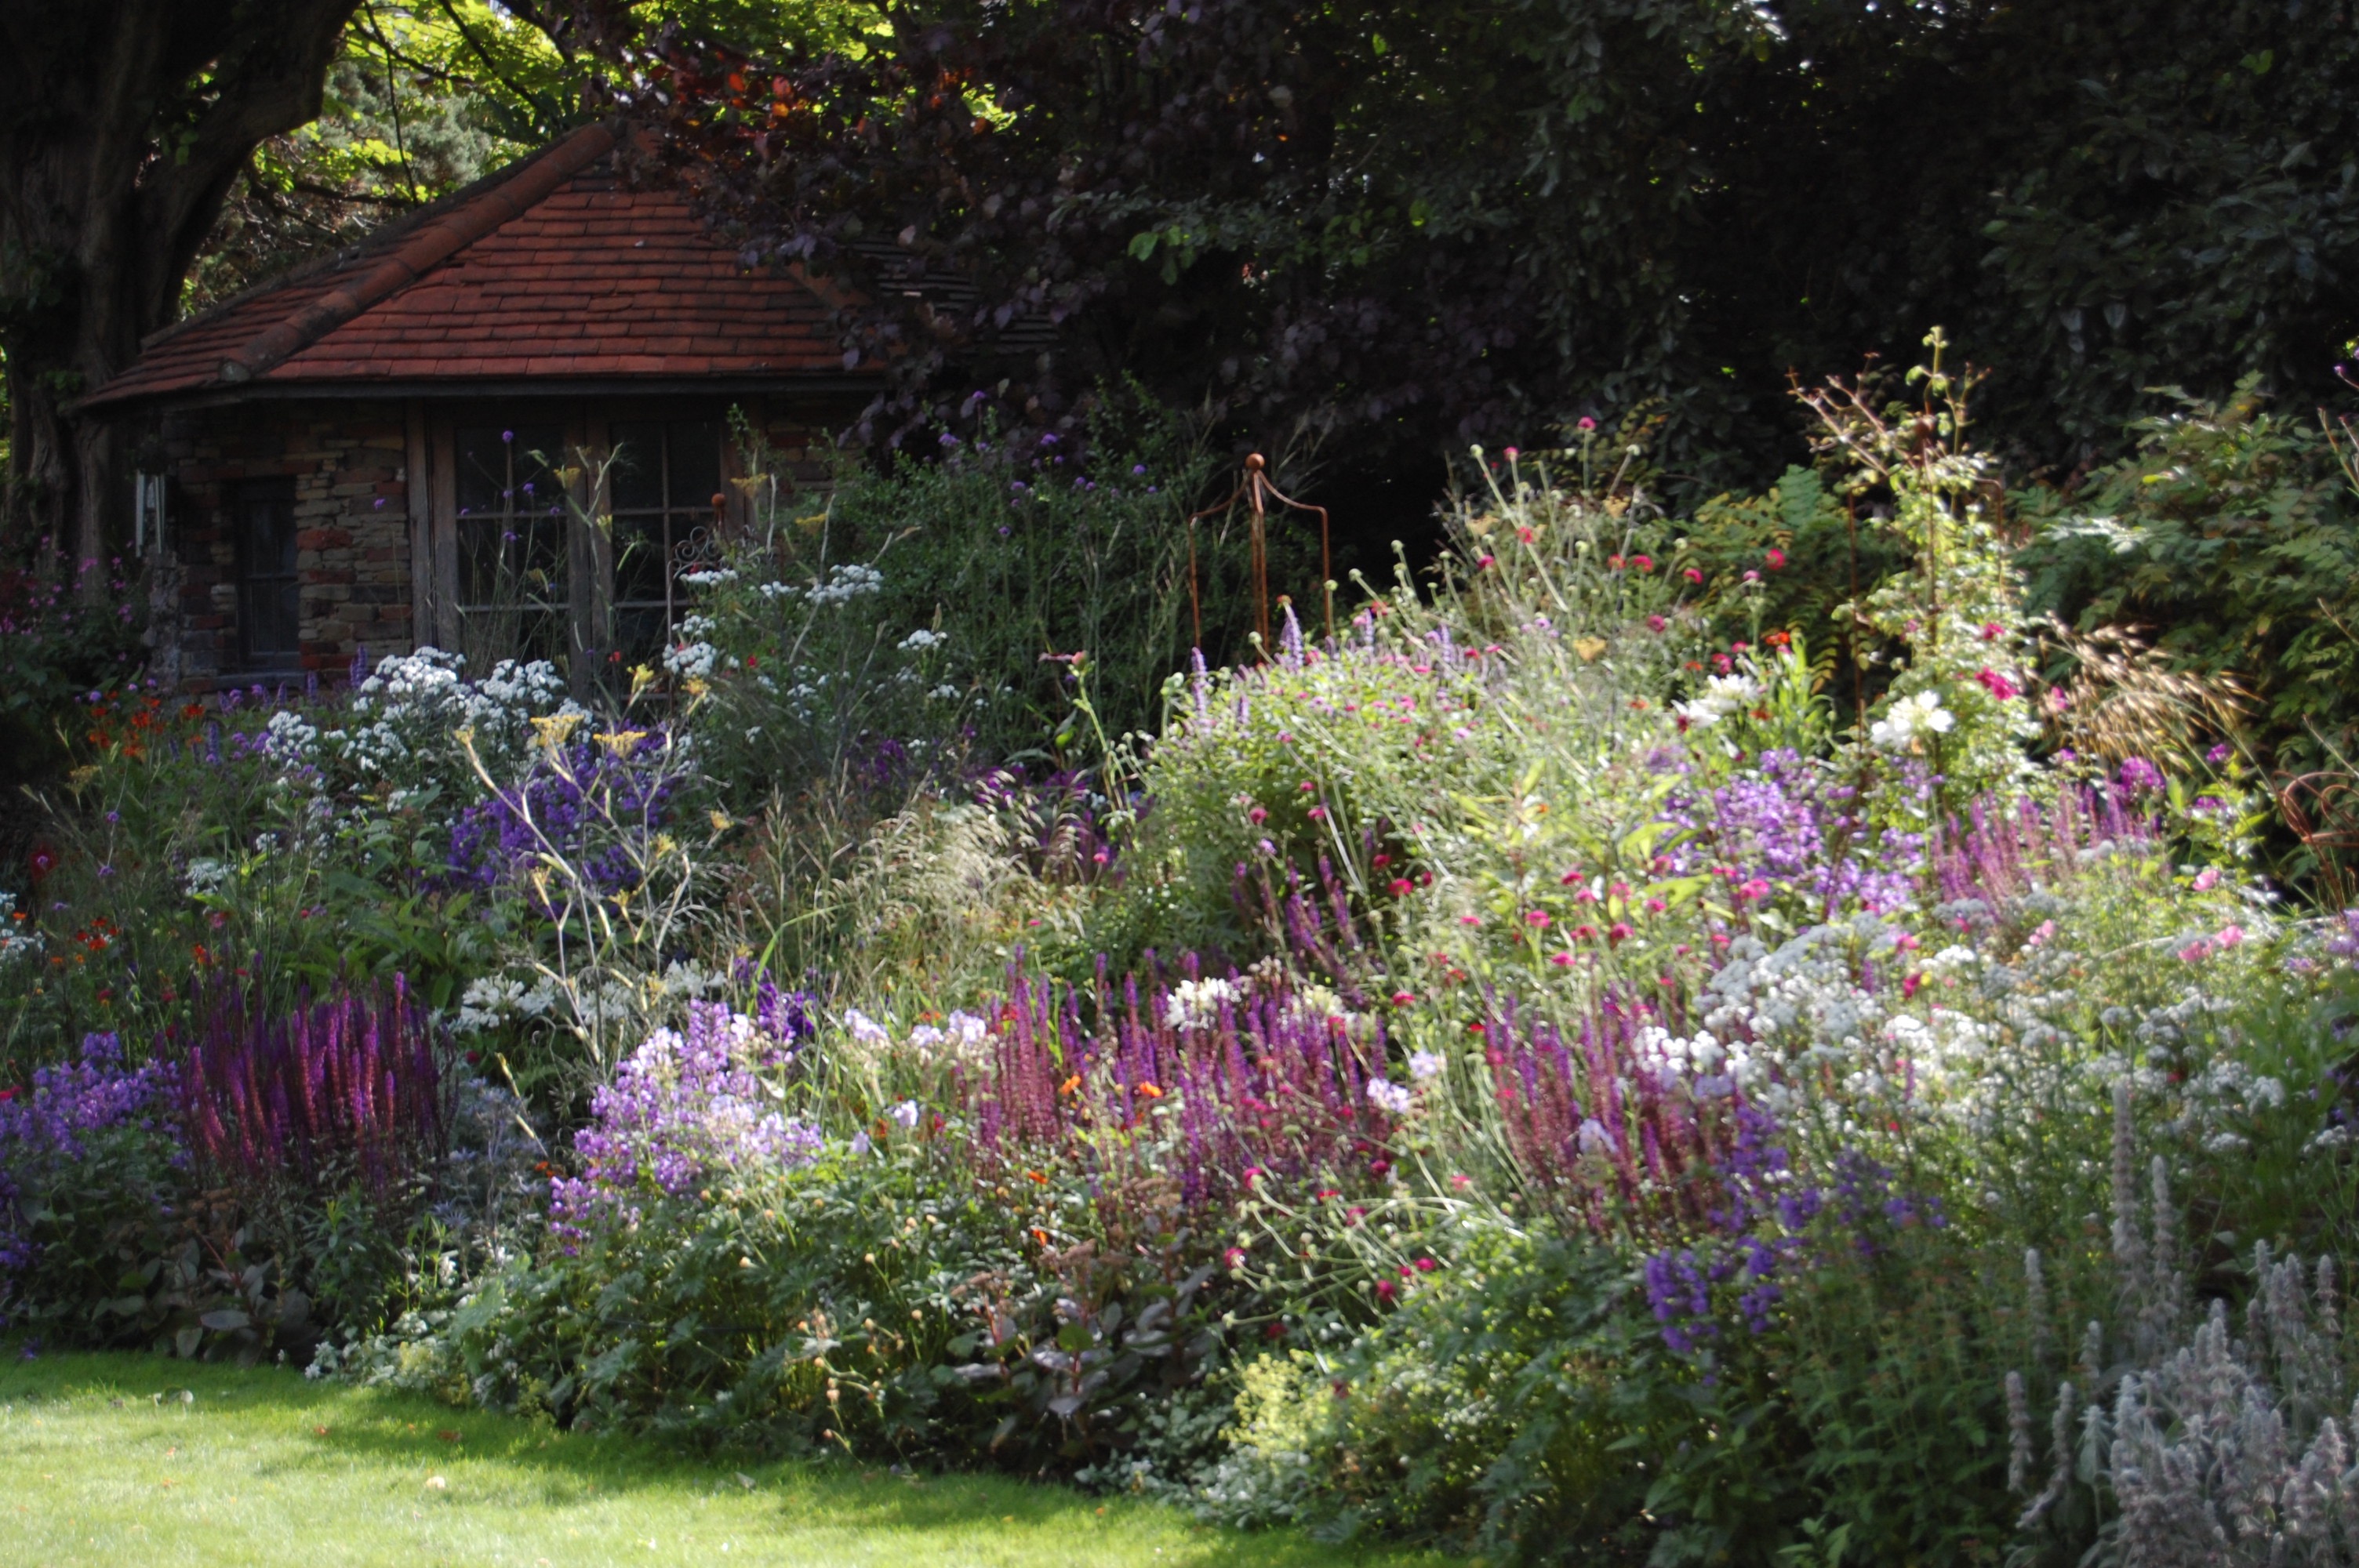 Picture showing a garden design by Ben MacDonald